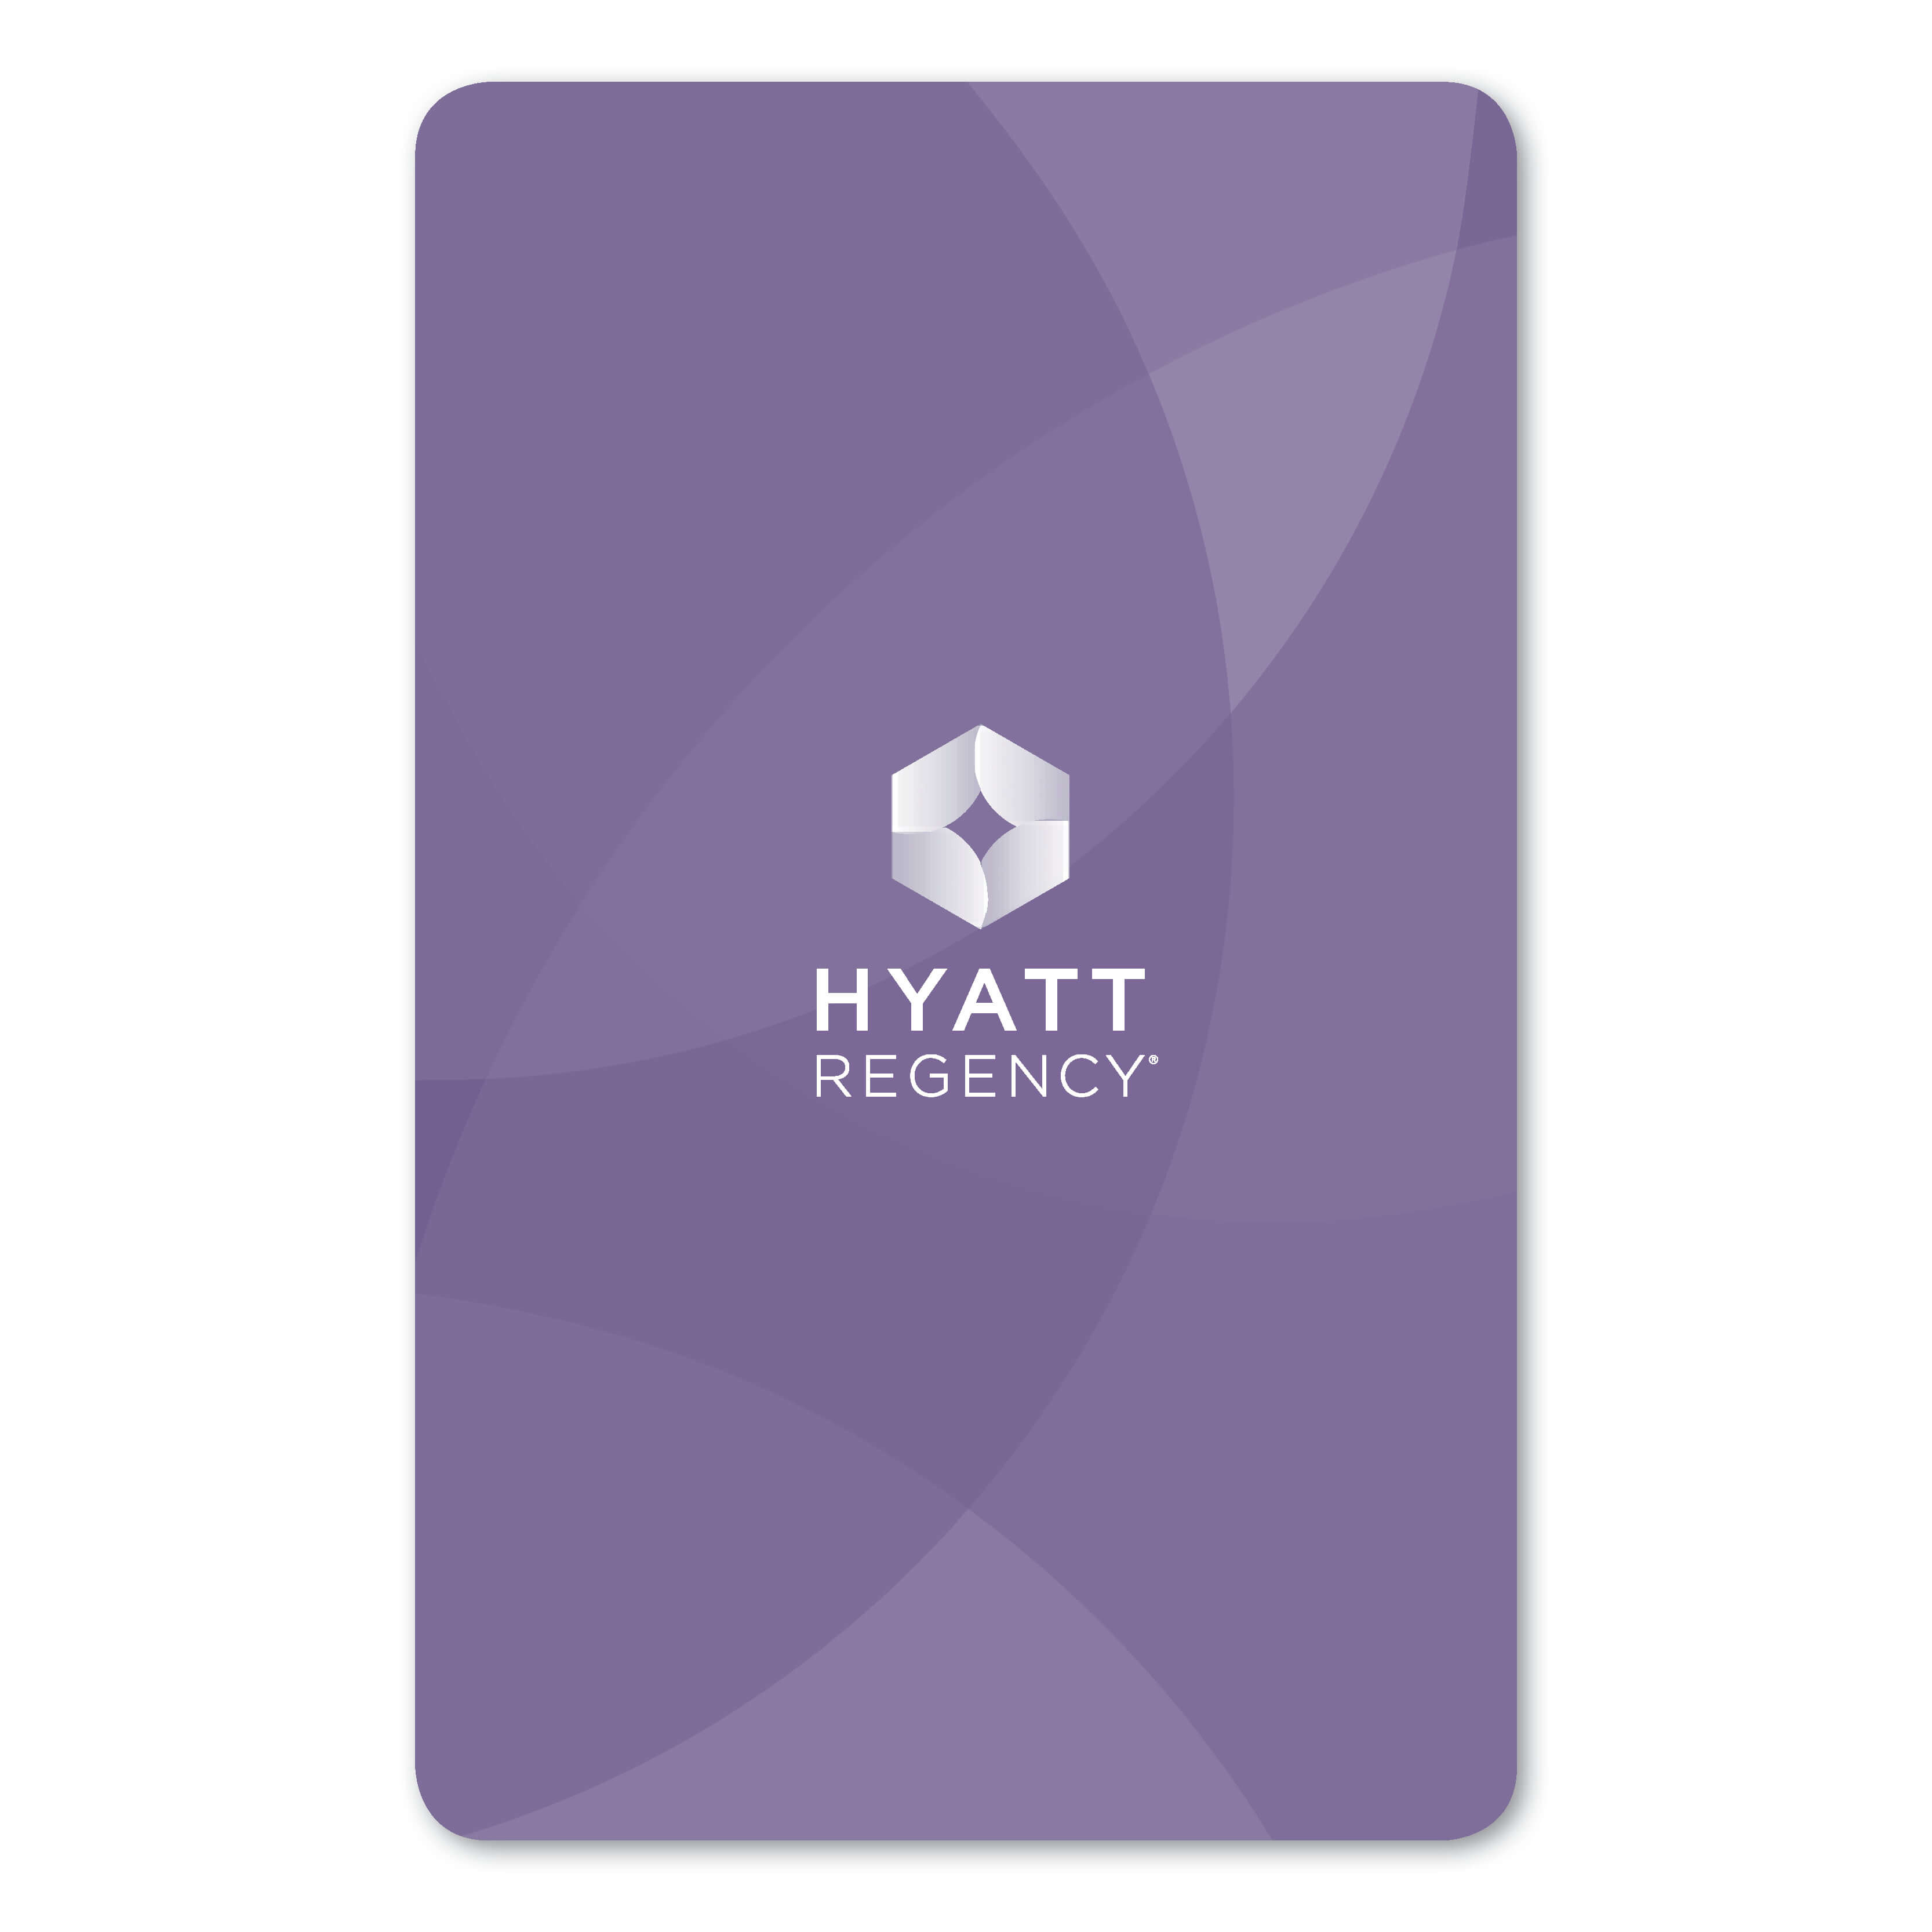 Hyatt Regency RFID hotel key card purple